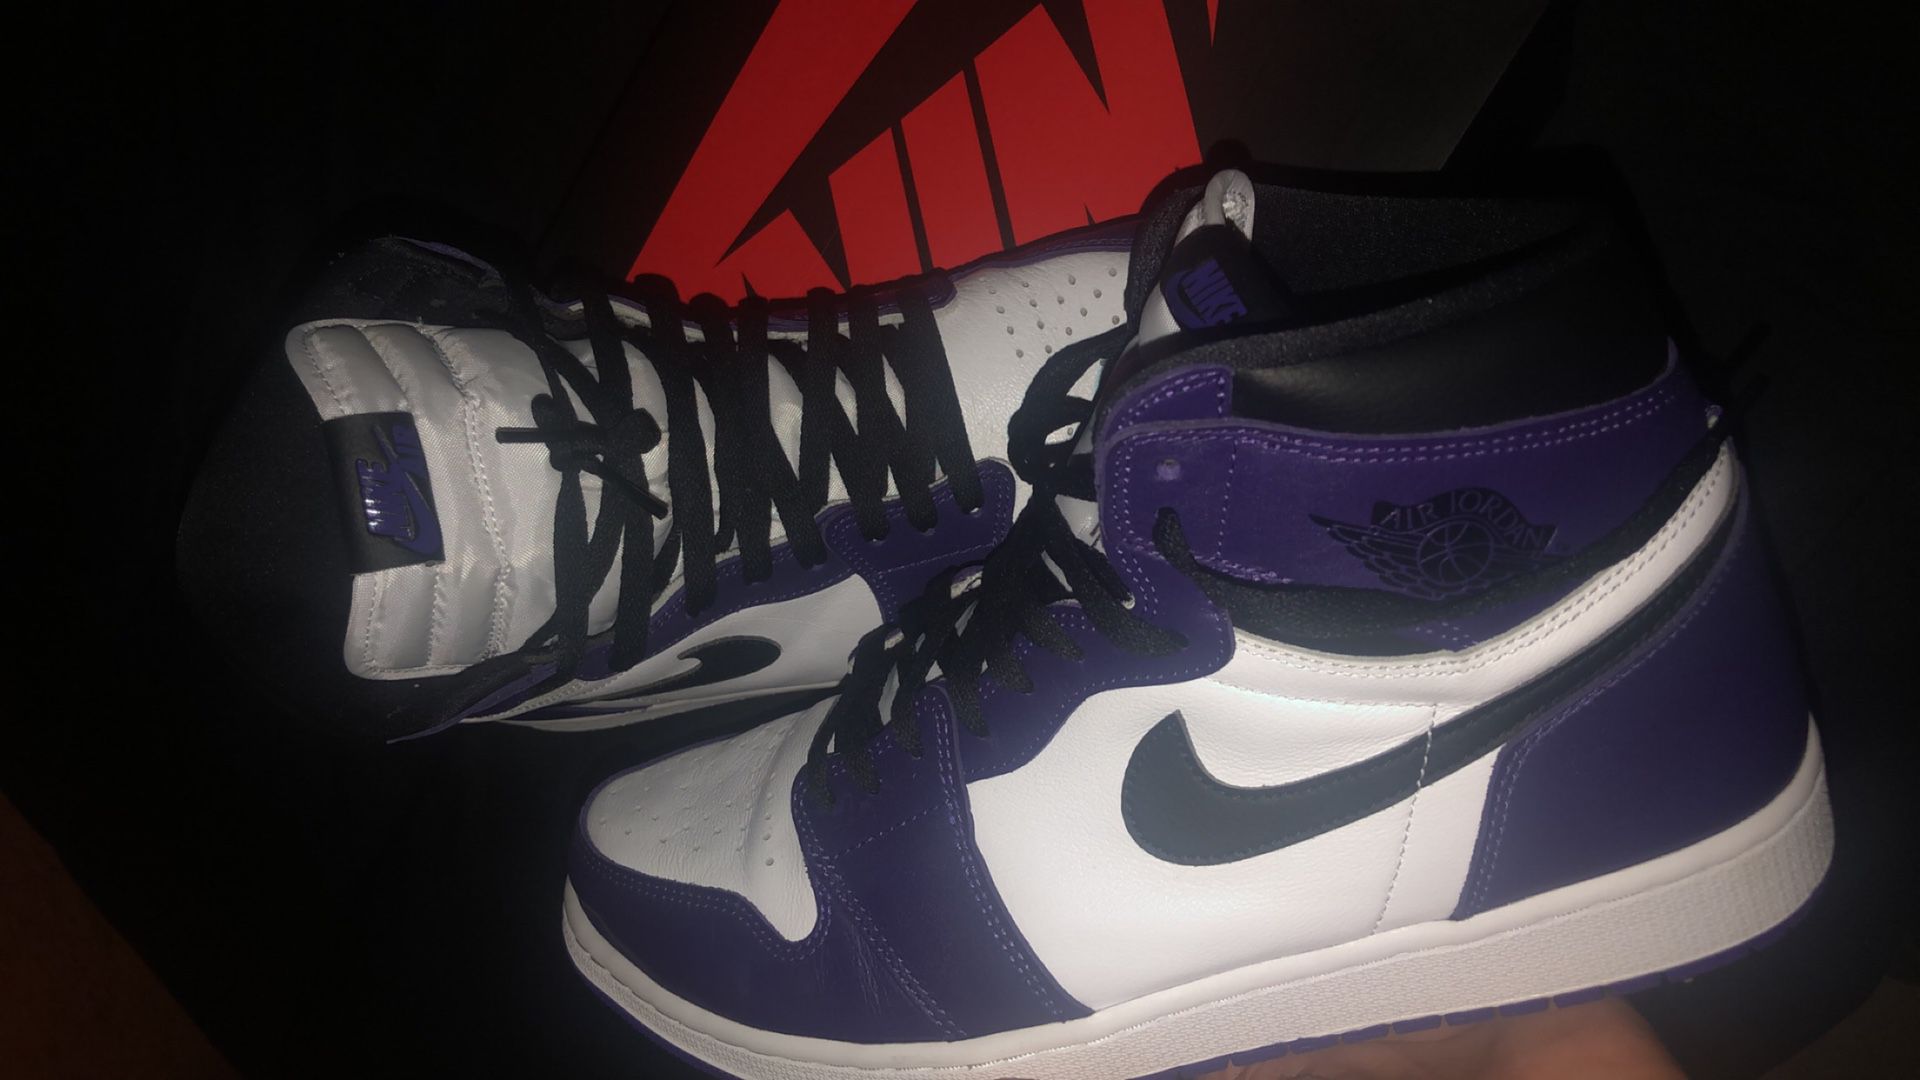 Jordan 1 court purple 2.0 size 12.5